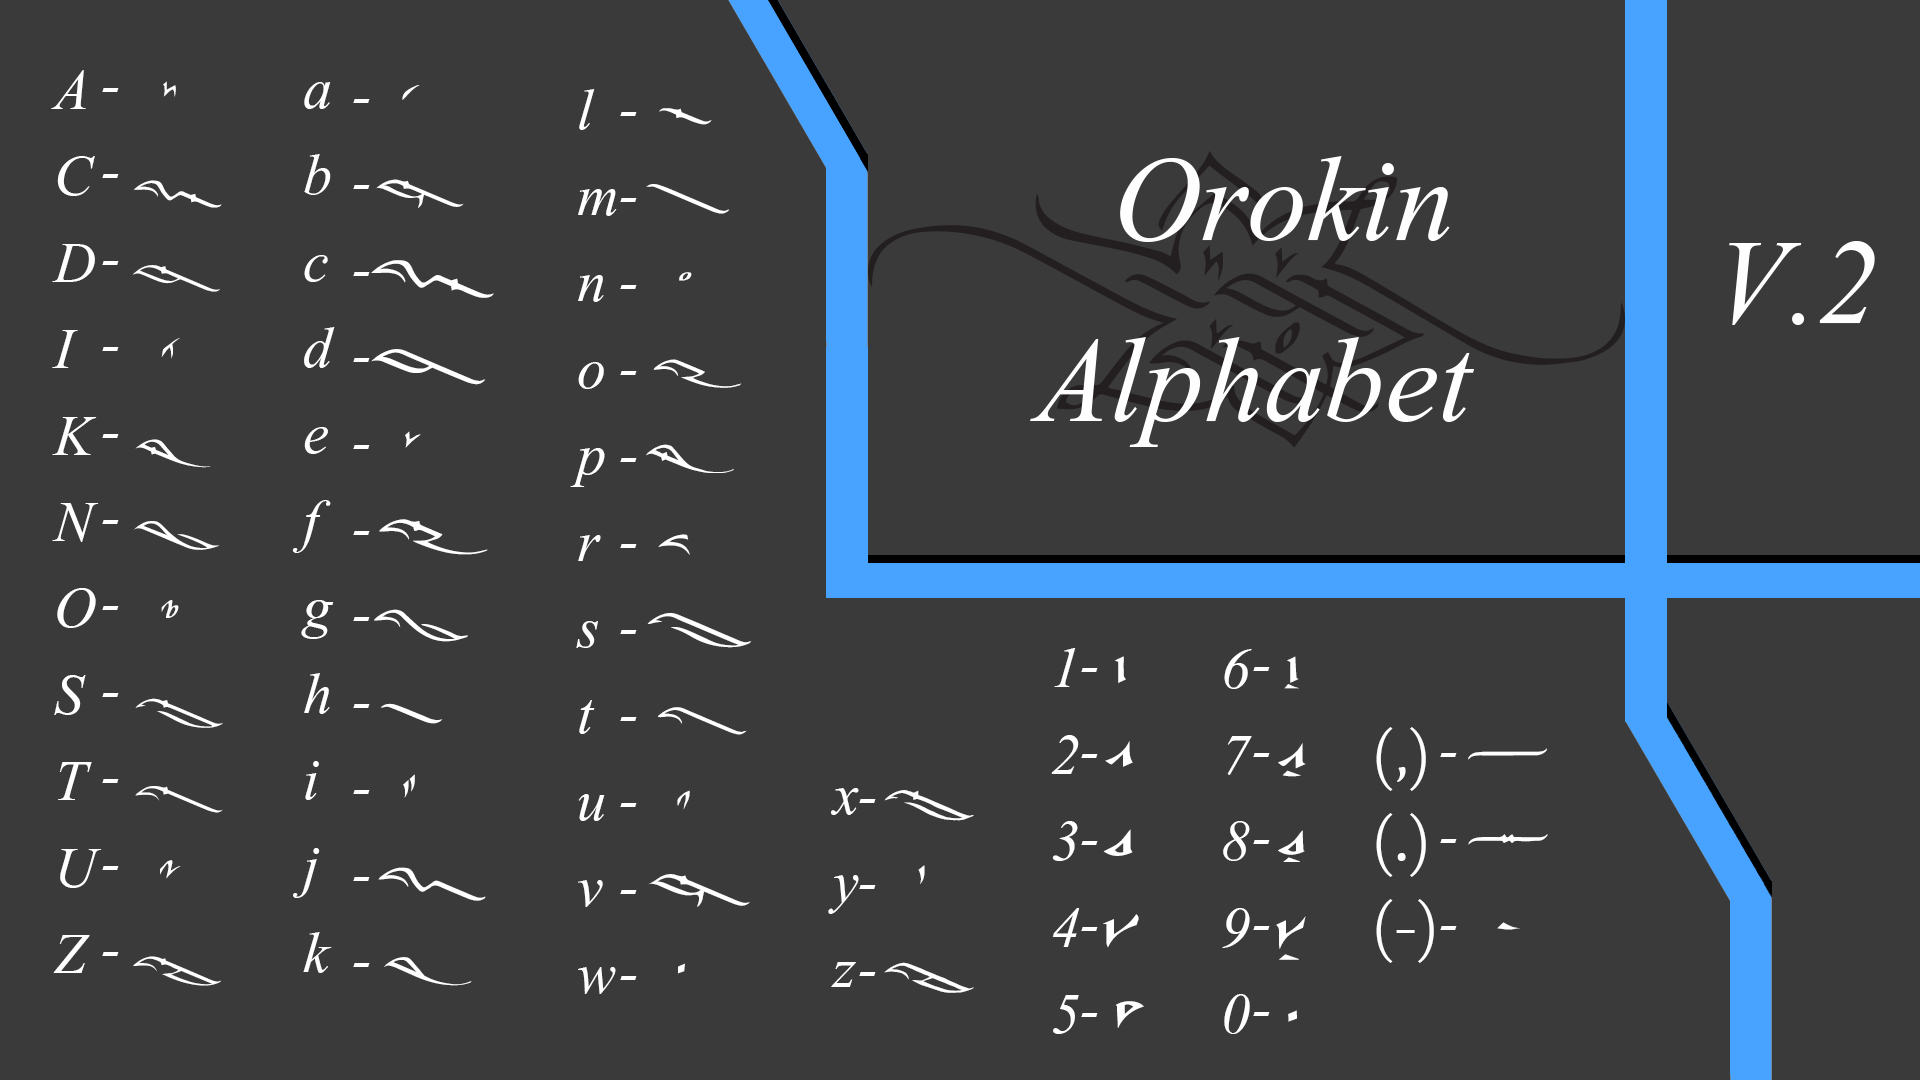 Orokin Language V.2 by Dylexy on DeviantArt